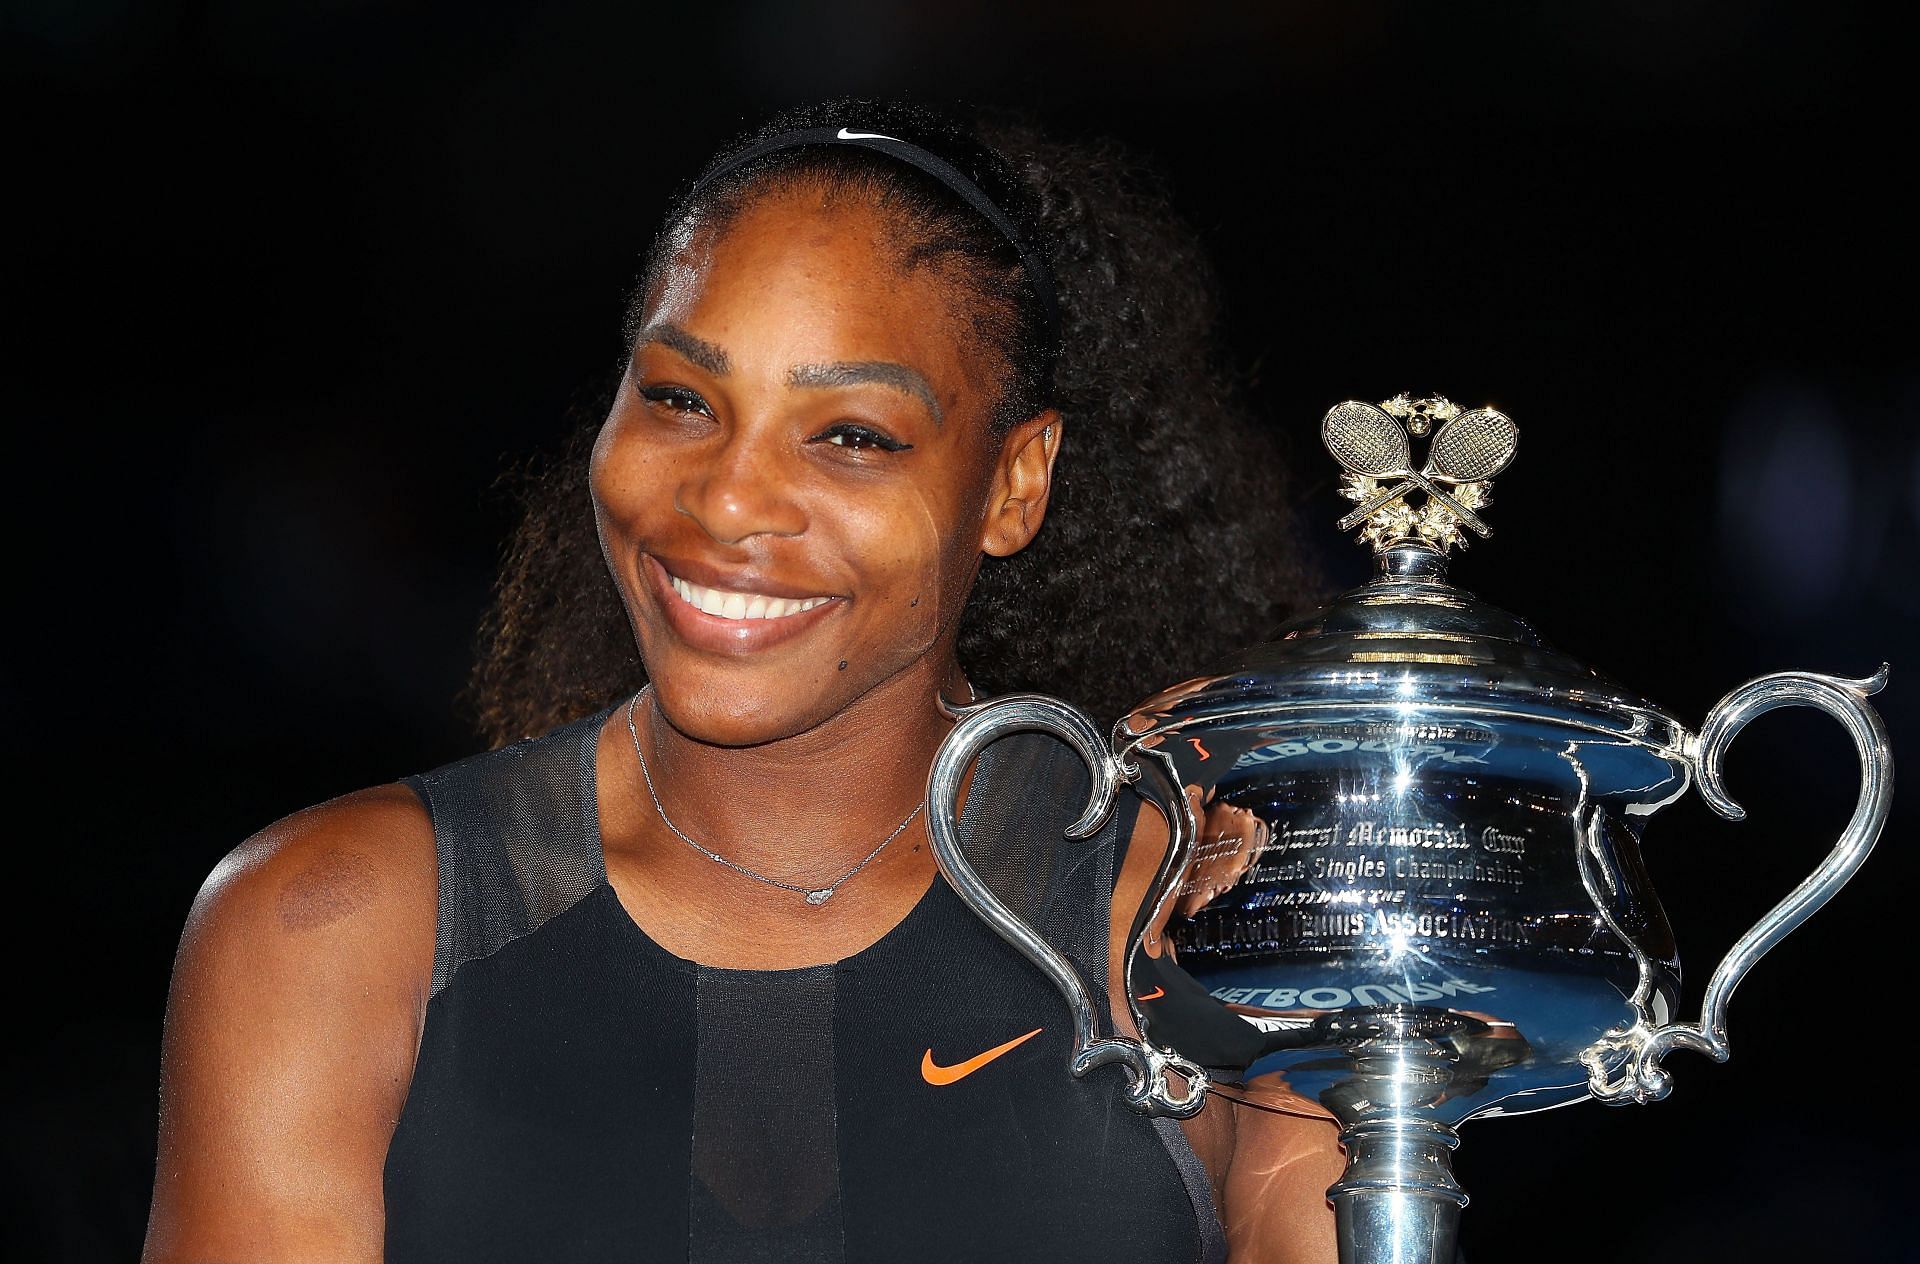 Serena Williams at the 2017 Australian Open - Day 13